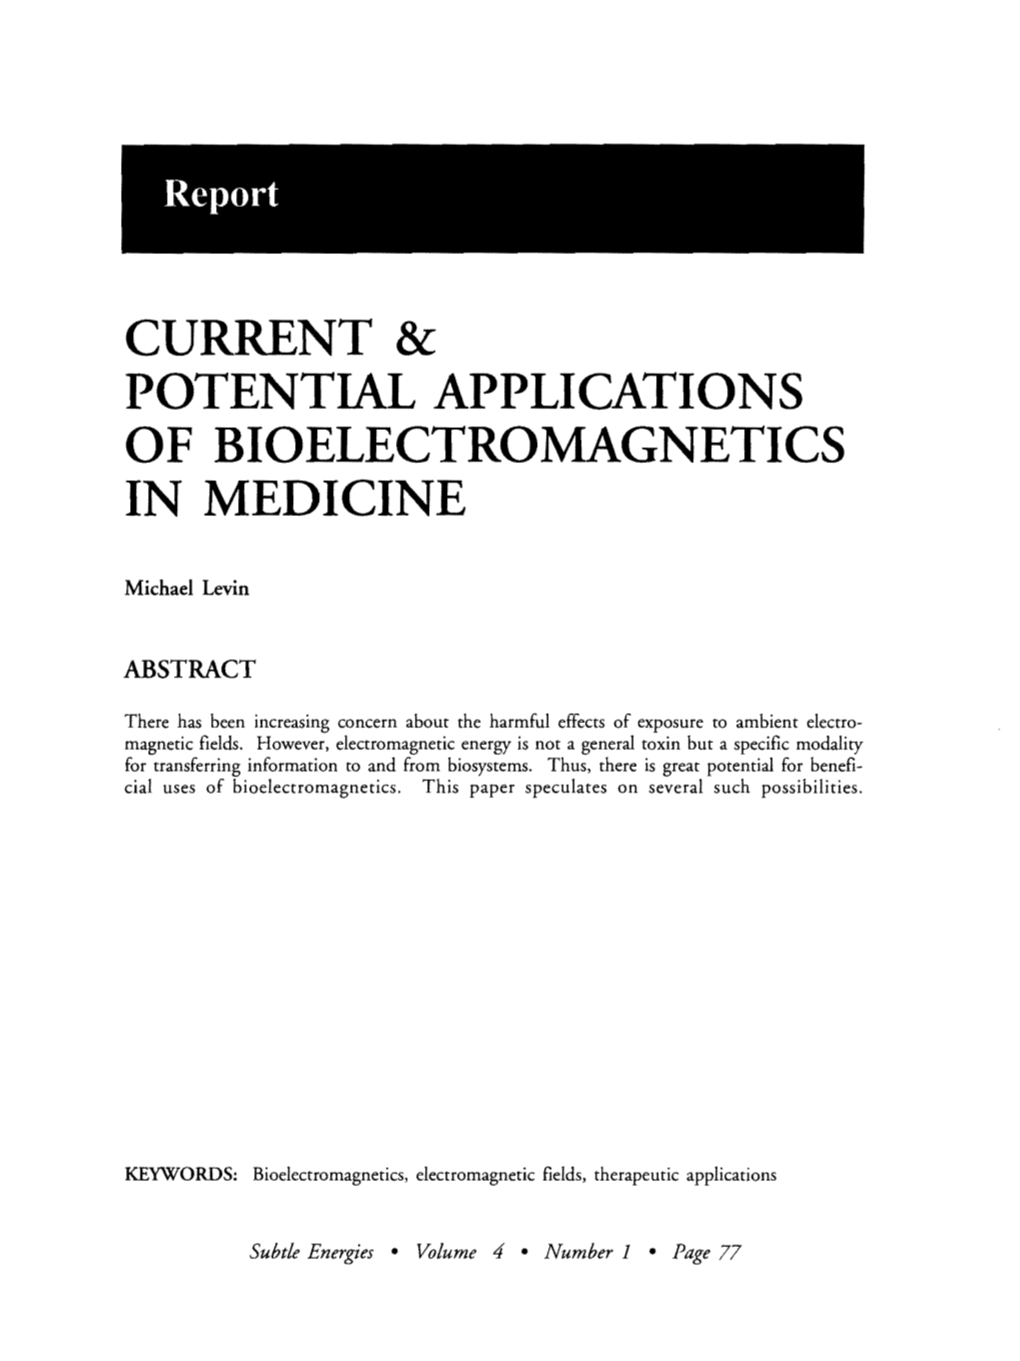 Current & Potential Applications of Bioelectromagnetics in Medicine